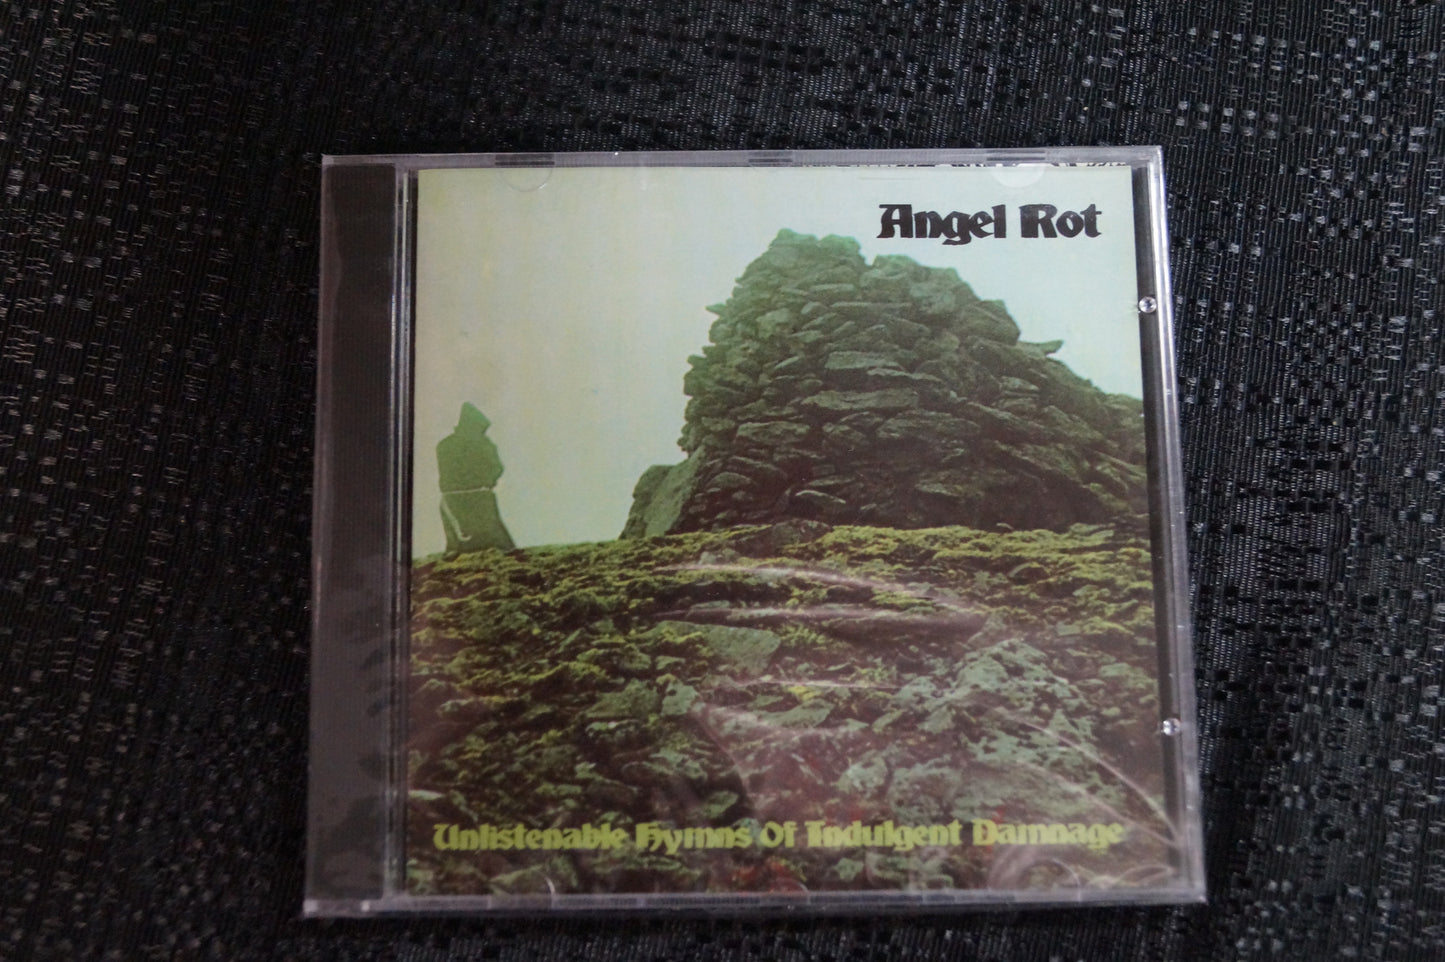 Angel Rot "Unlistenable Hymns of Indulgent Damage" 1999 CD Art By Kozik